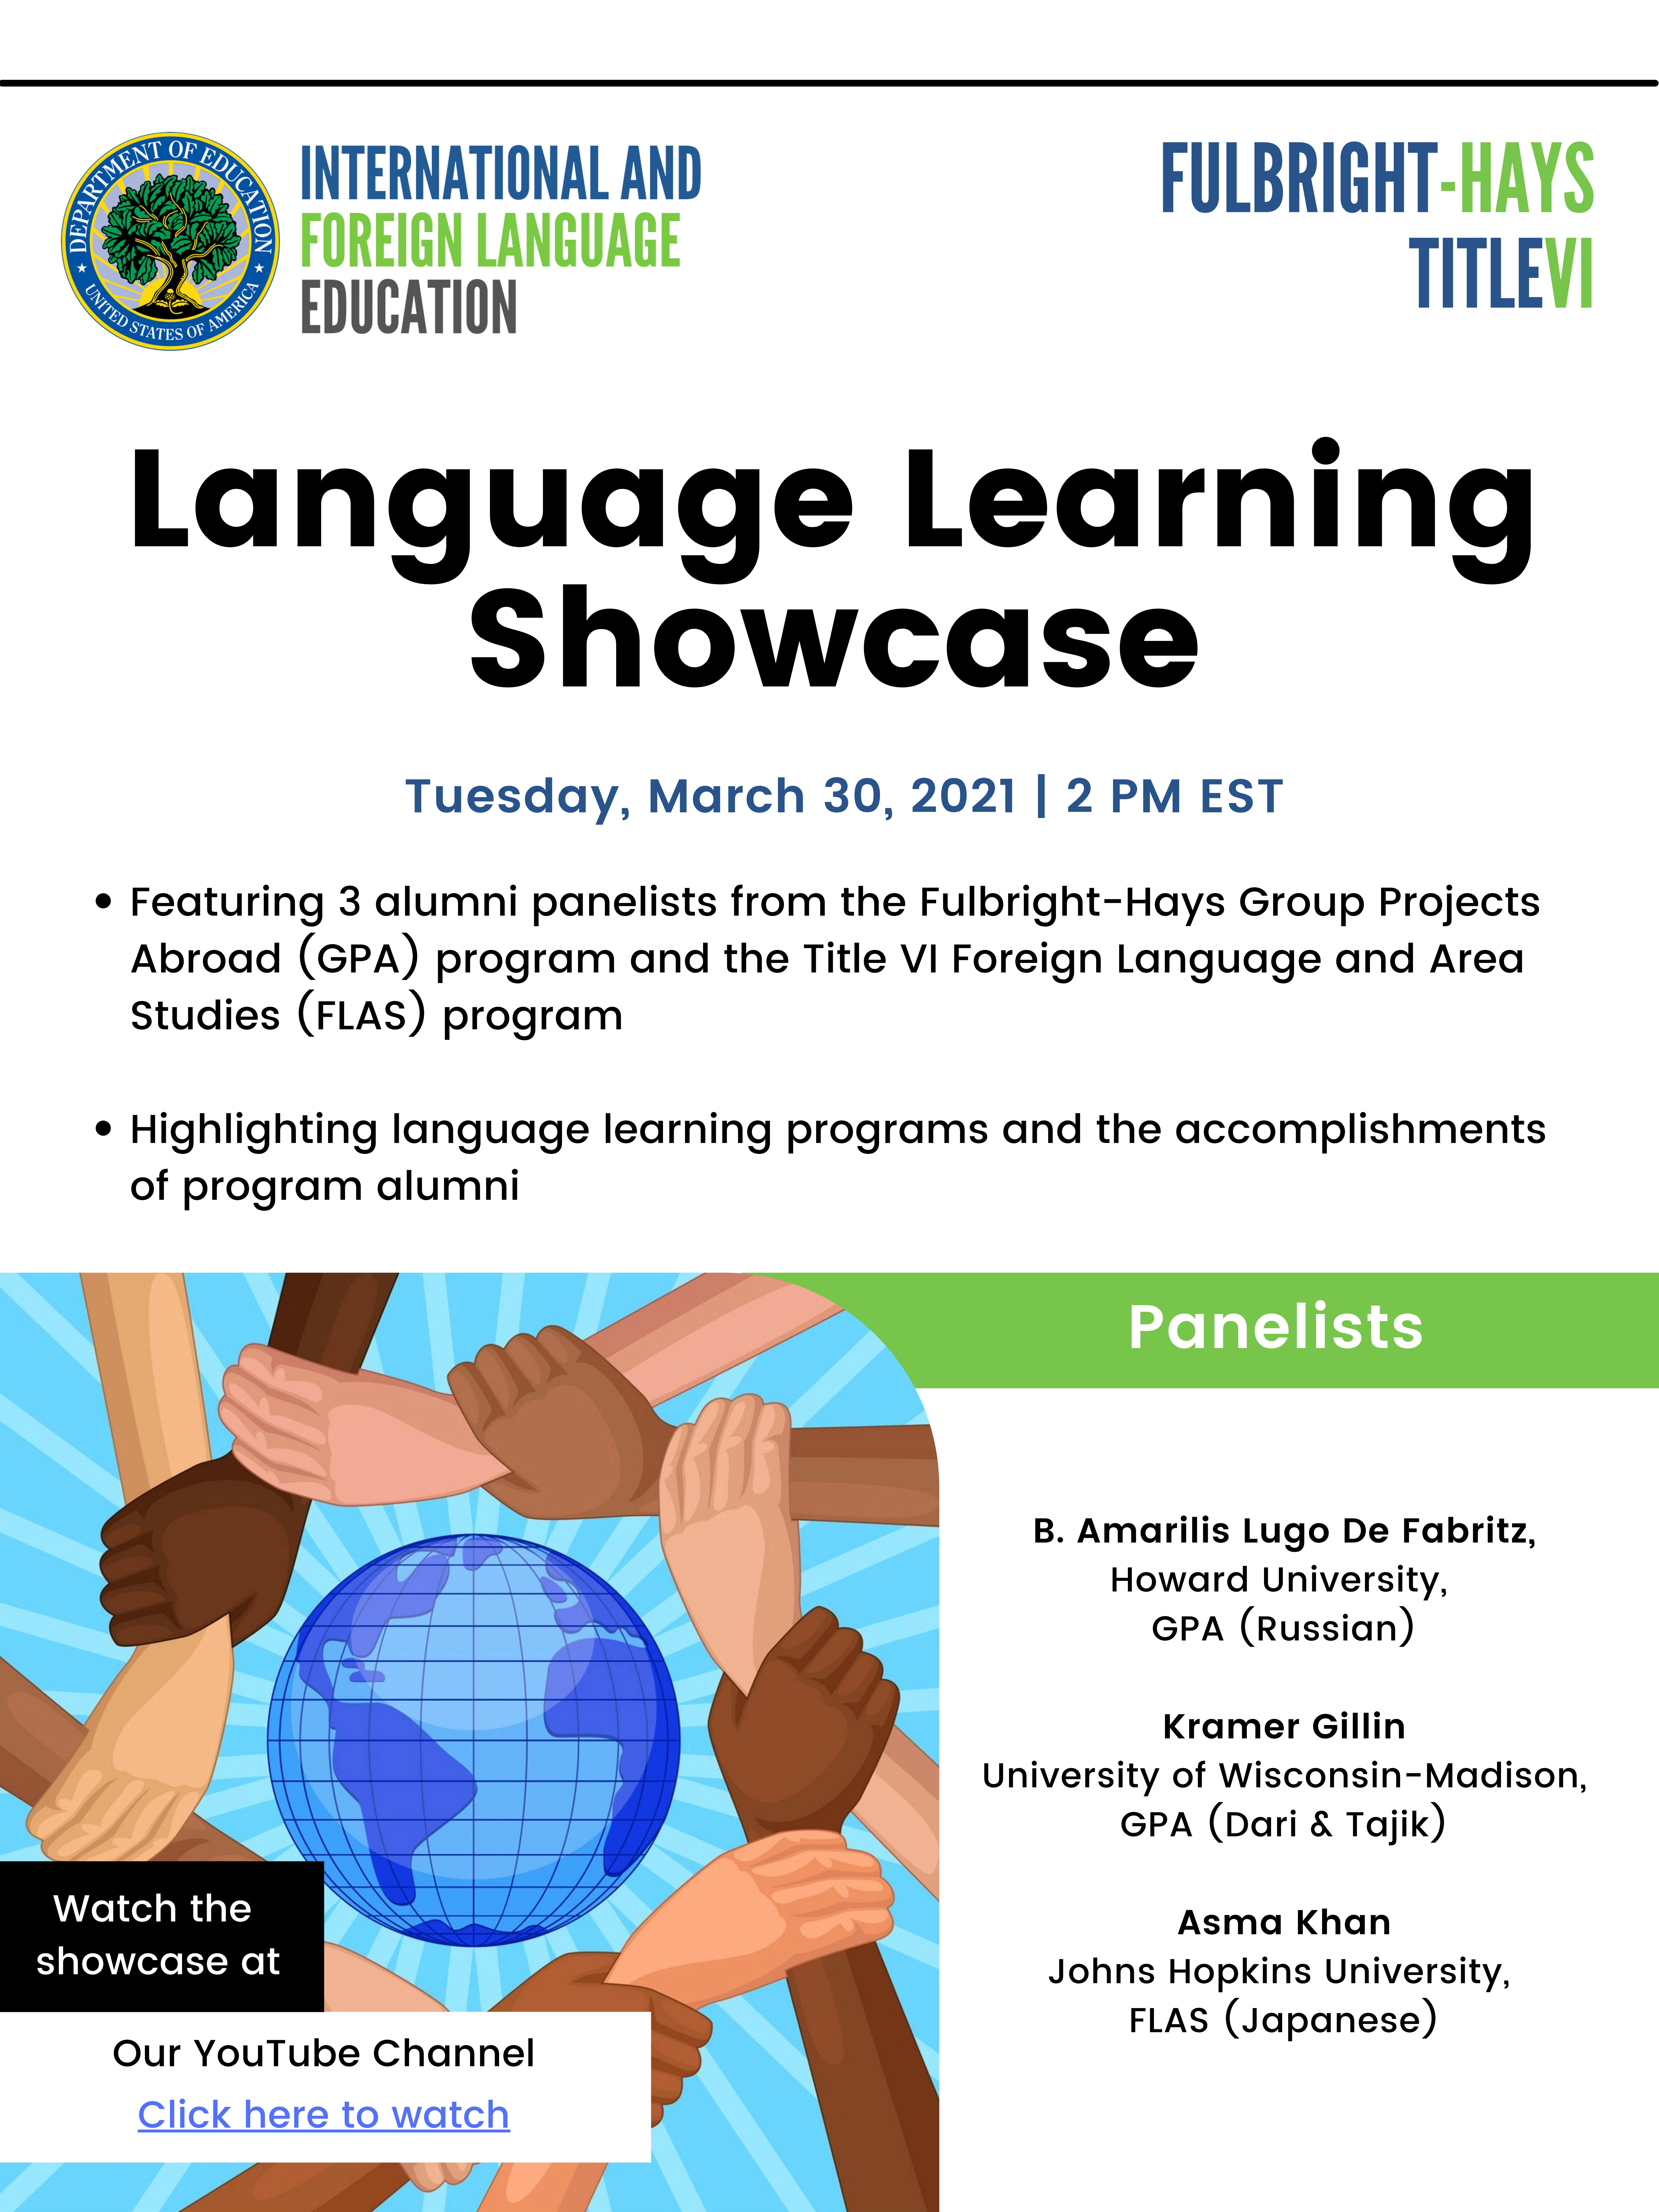 Language Learning Showcase via YouTube Premiere – Tuesday 3/30 at 2pm ET